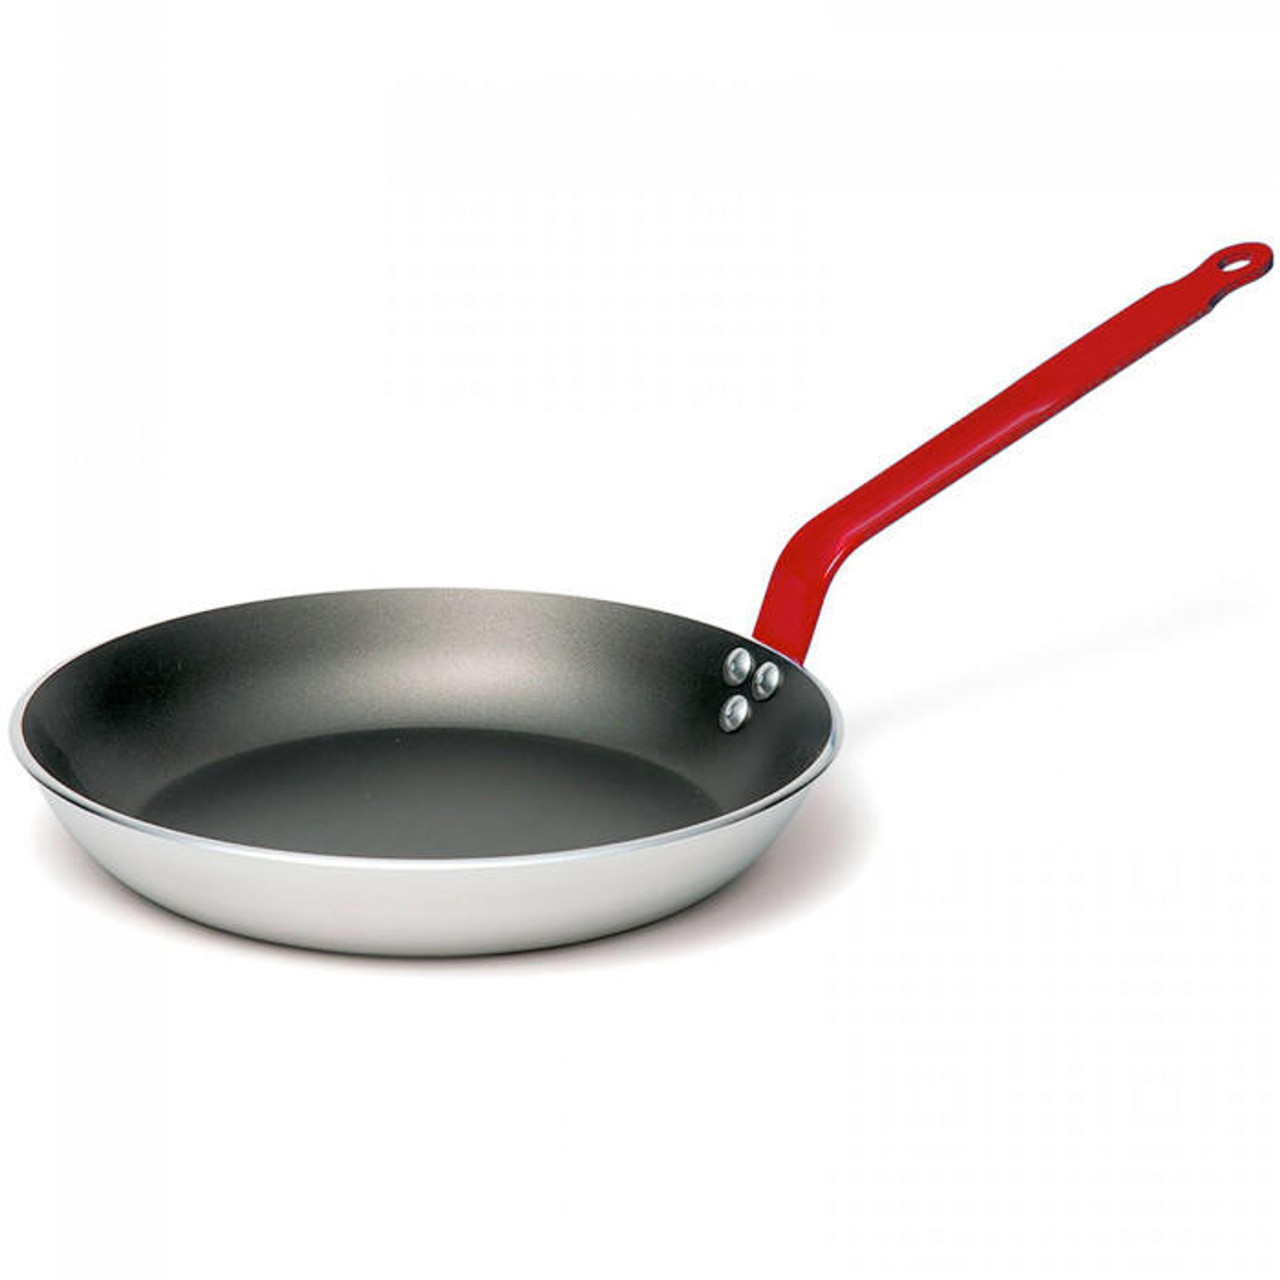 de Buyer Choc Non-Stick Round Pan - Red Iron Handle 12.5